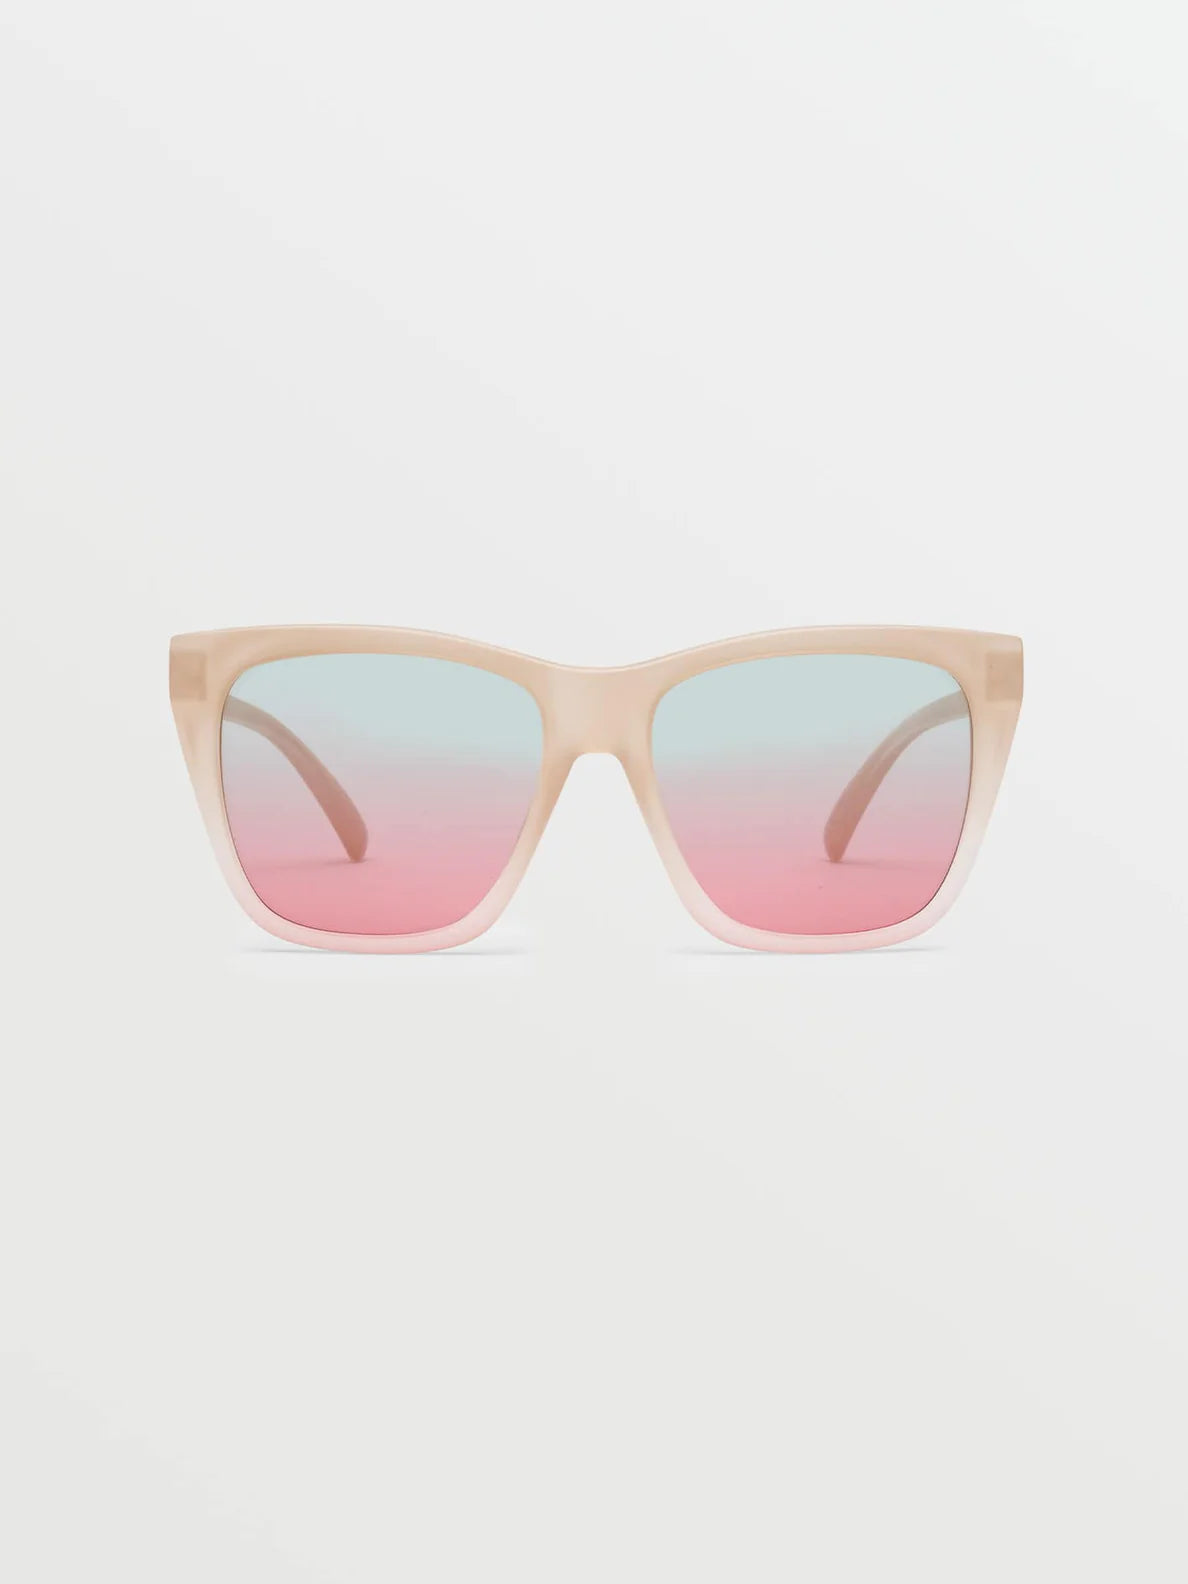 Looky Lou So Faded Sunglasses (Aqua Gradient Lens) - SUNFADE